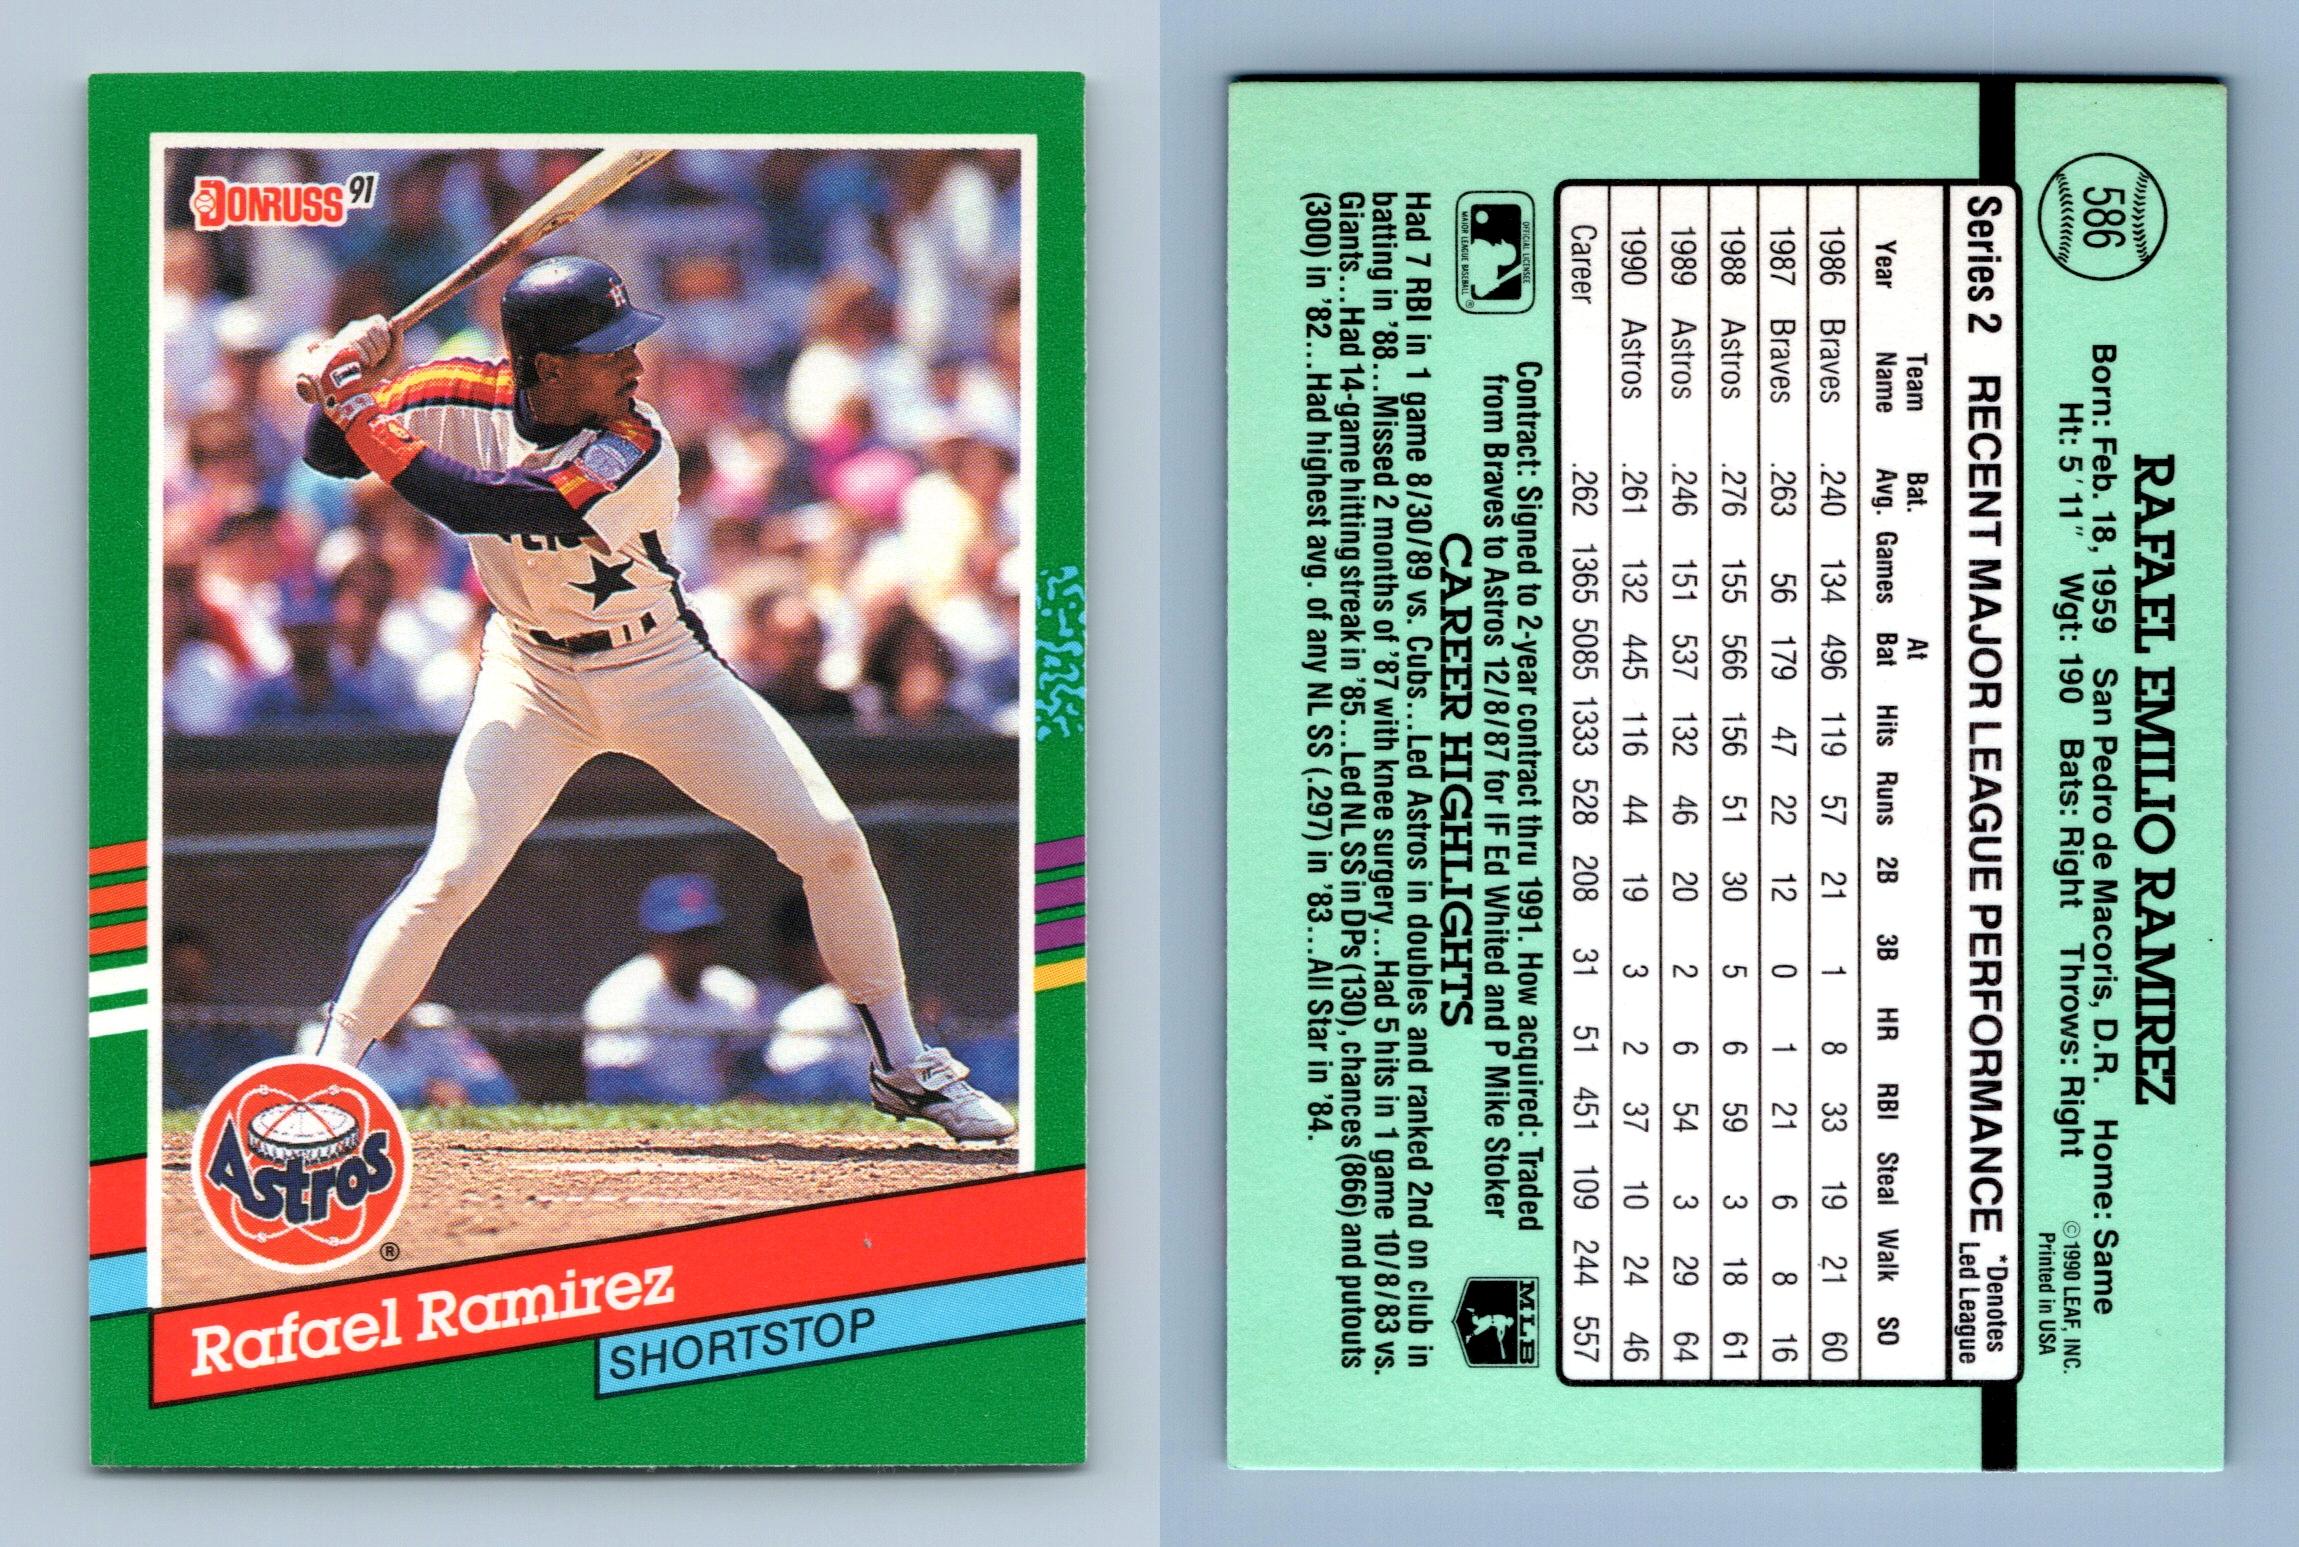 Donruss 91 Chris Hoiles 358 Baseball Card - READ DESCRIPTION